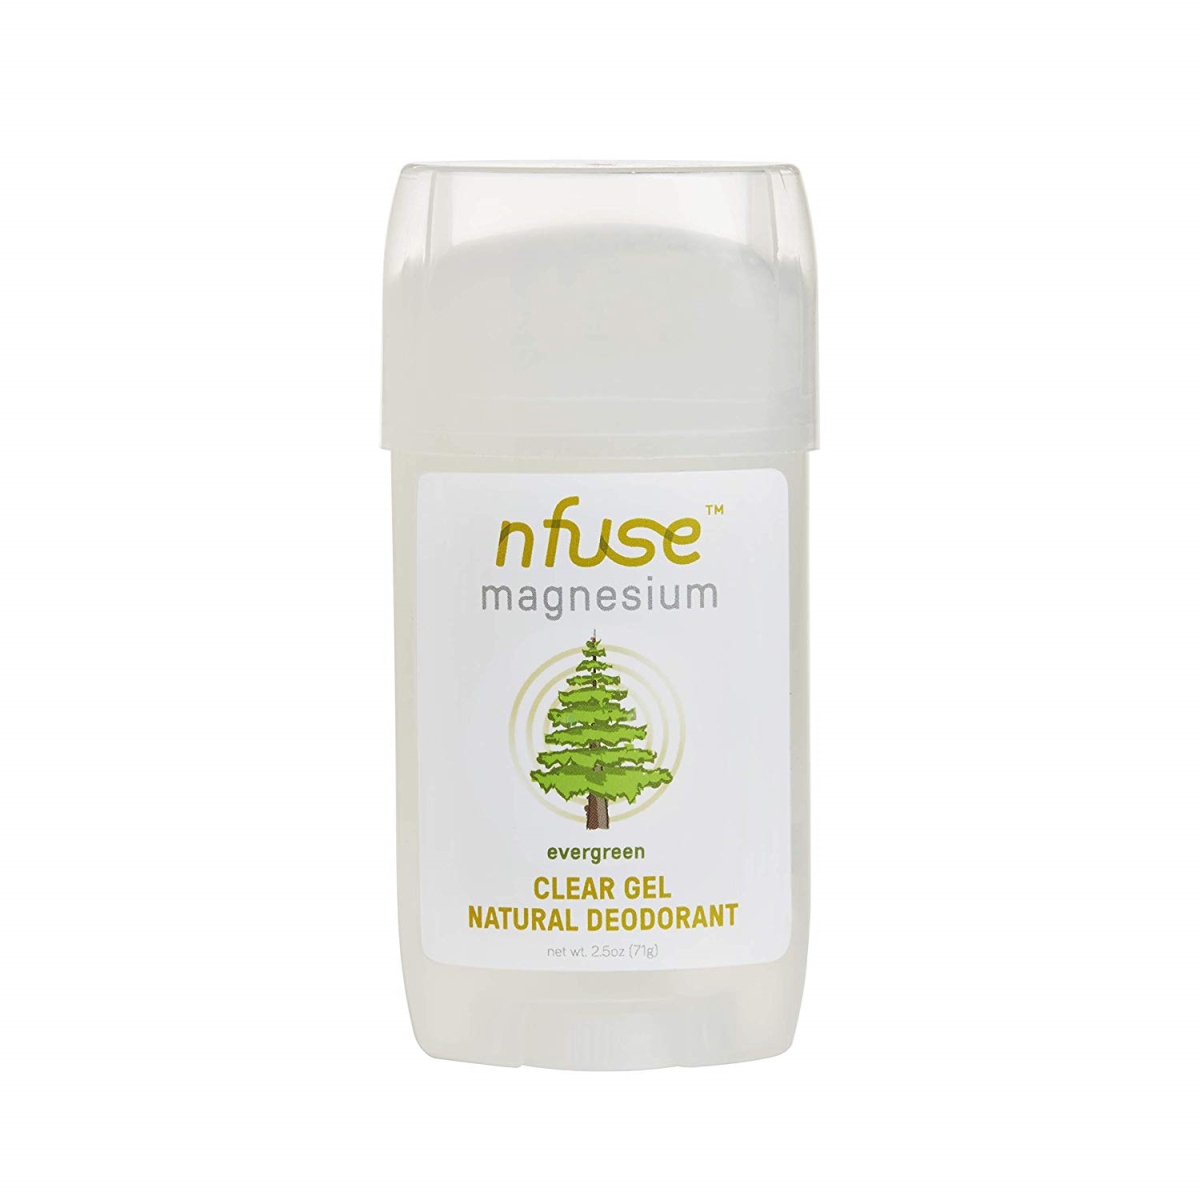 242128 2.5 Oz Magnesium Natural Clear Gel Deodorant, Evergreen